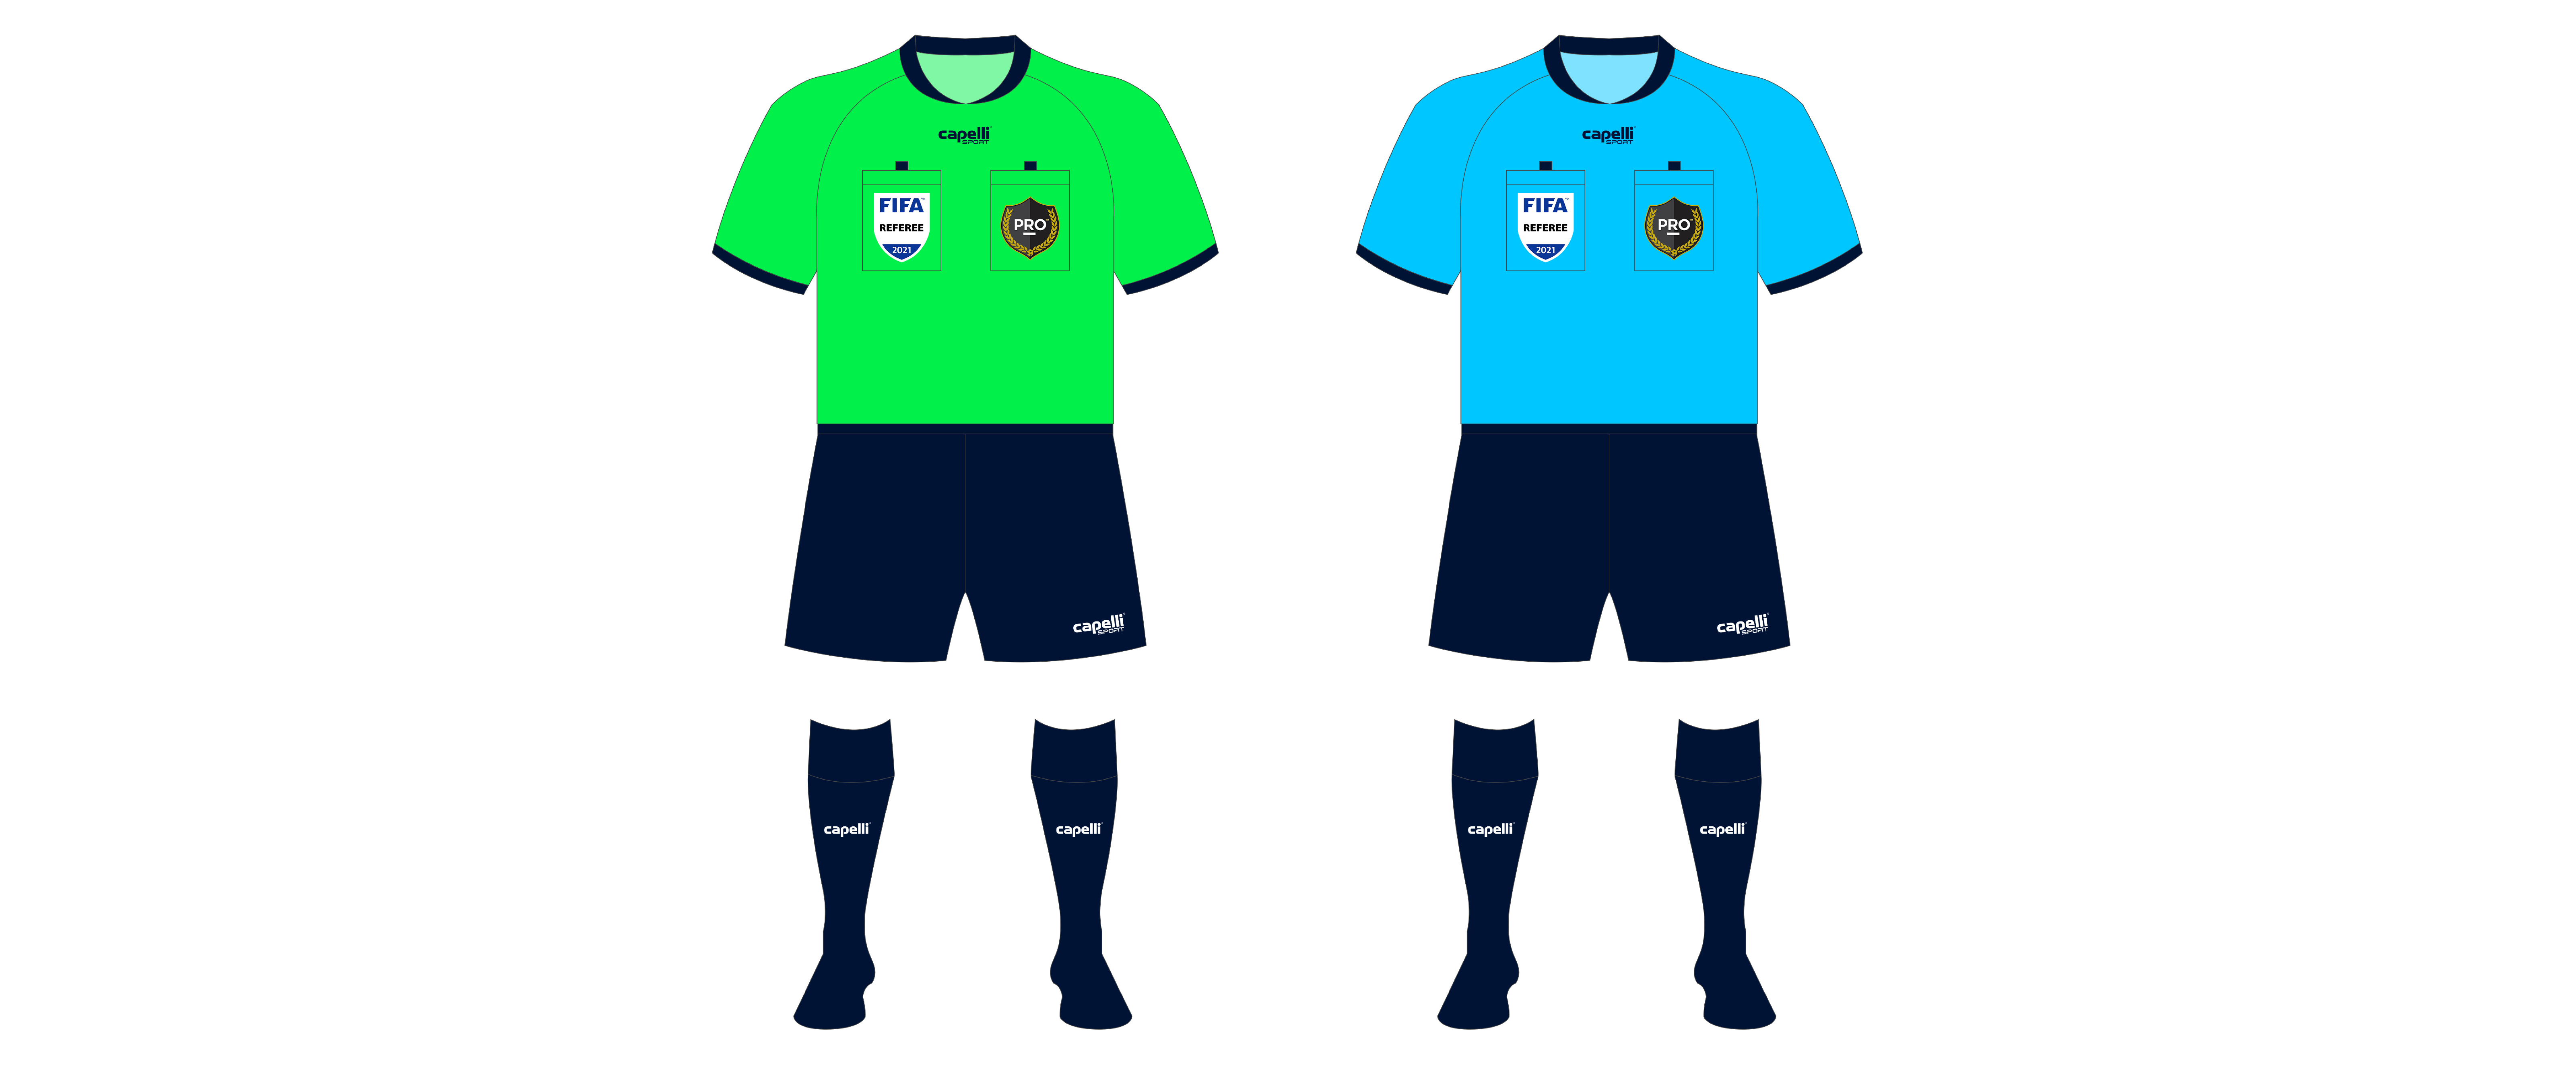 Bundesliga – Referee Kit History